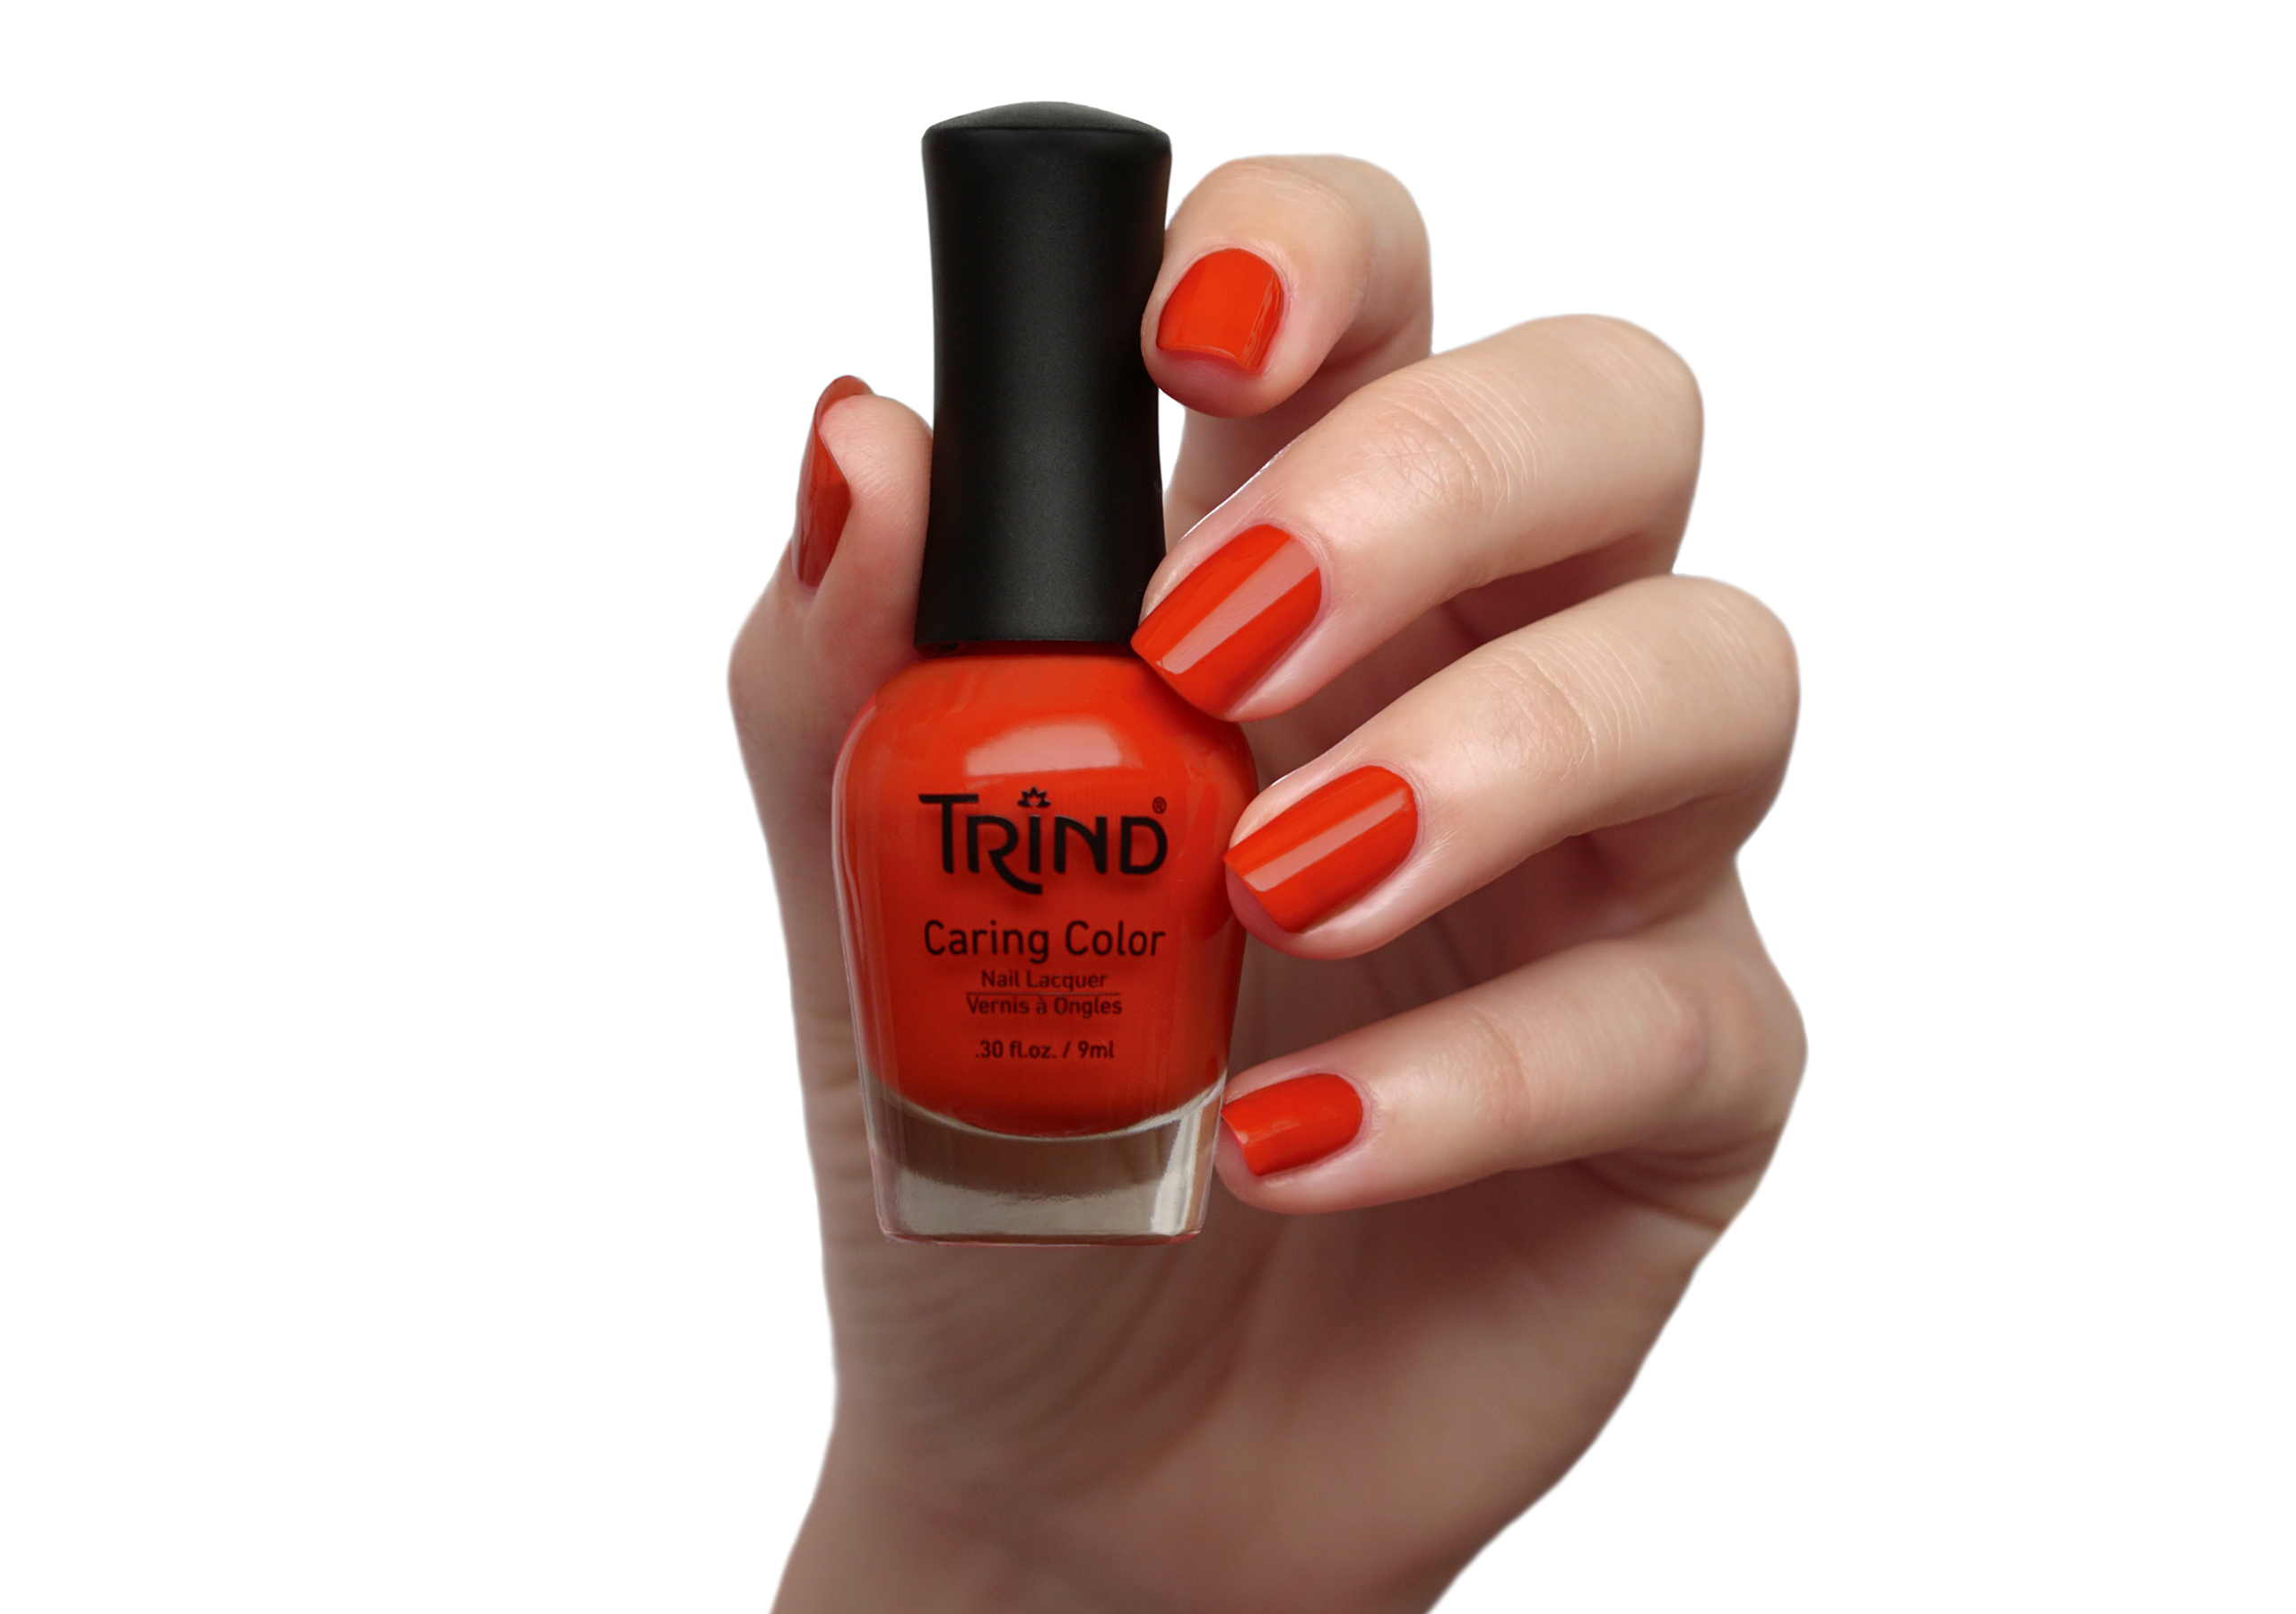 3. "Pumpkin Spice" nail polish shade - wide 10